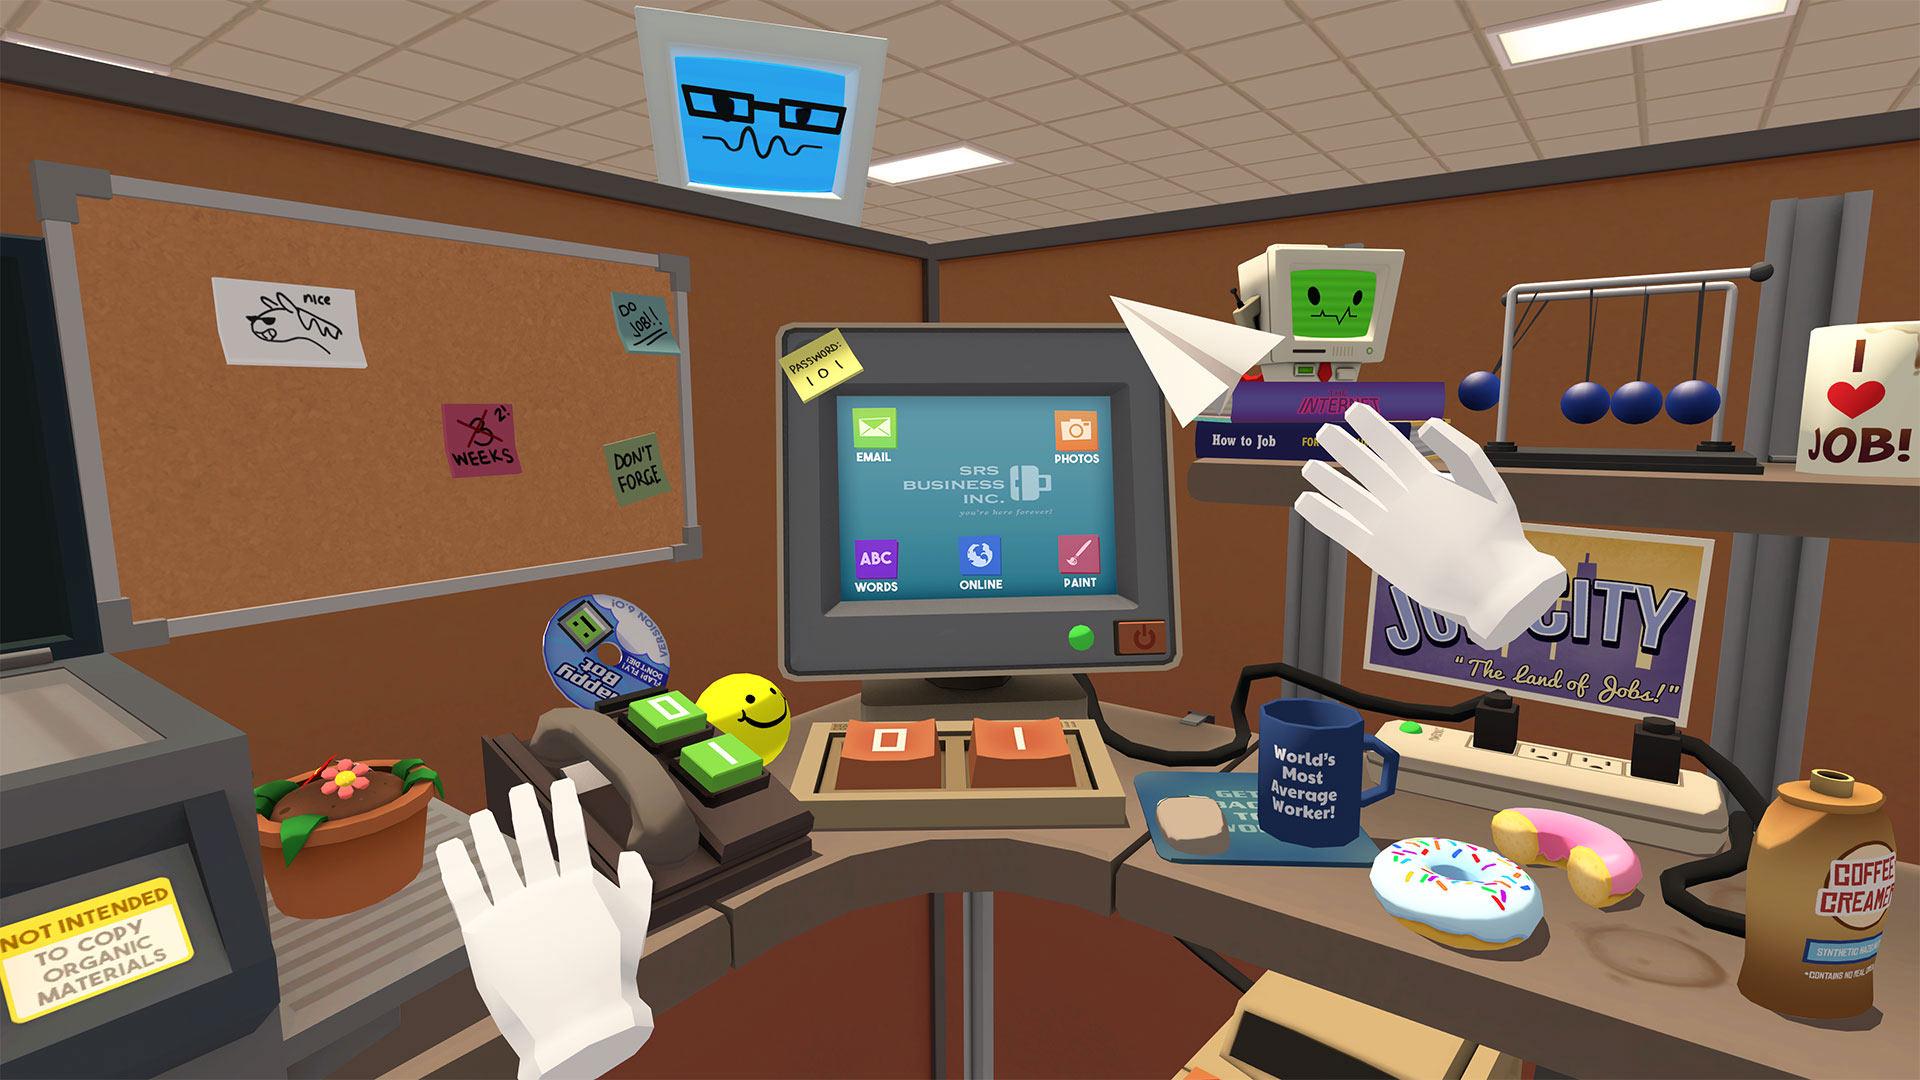 Job Simulator' Surpasses $3 Million in Sales, Becoming most popular